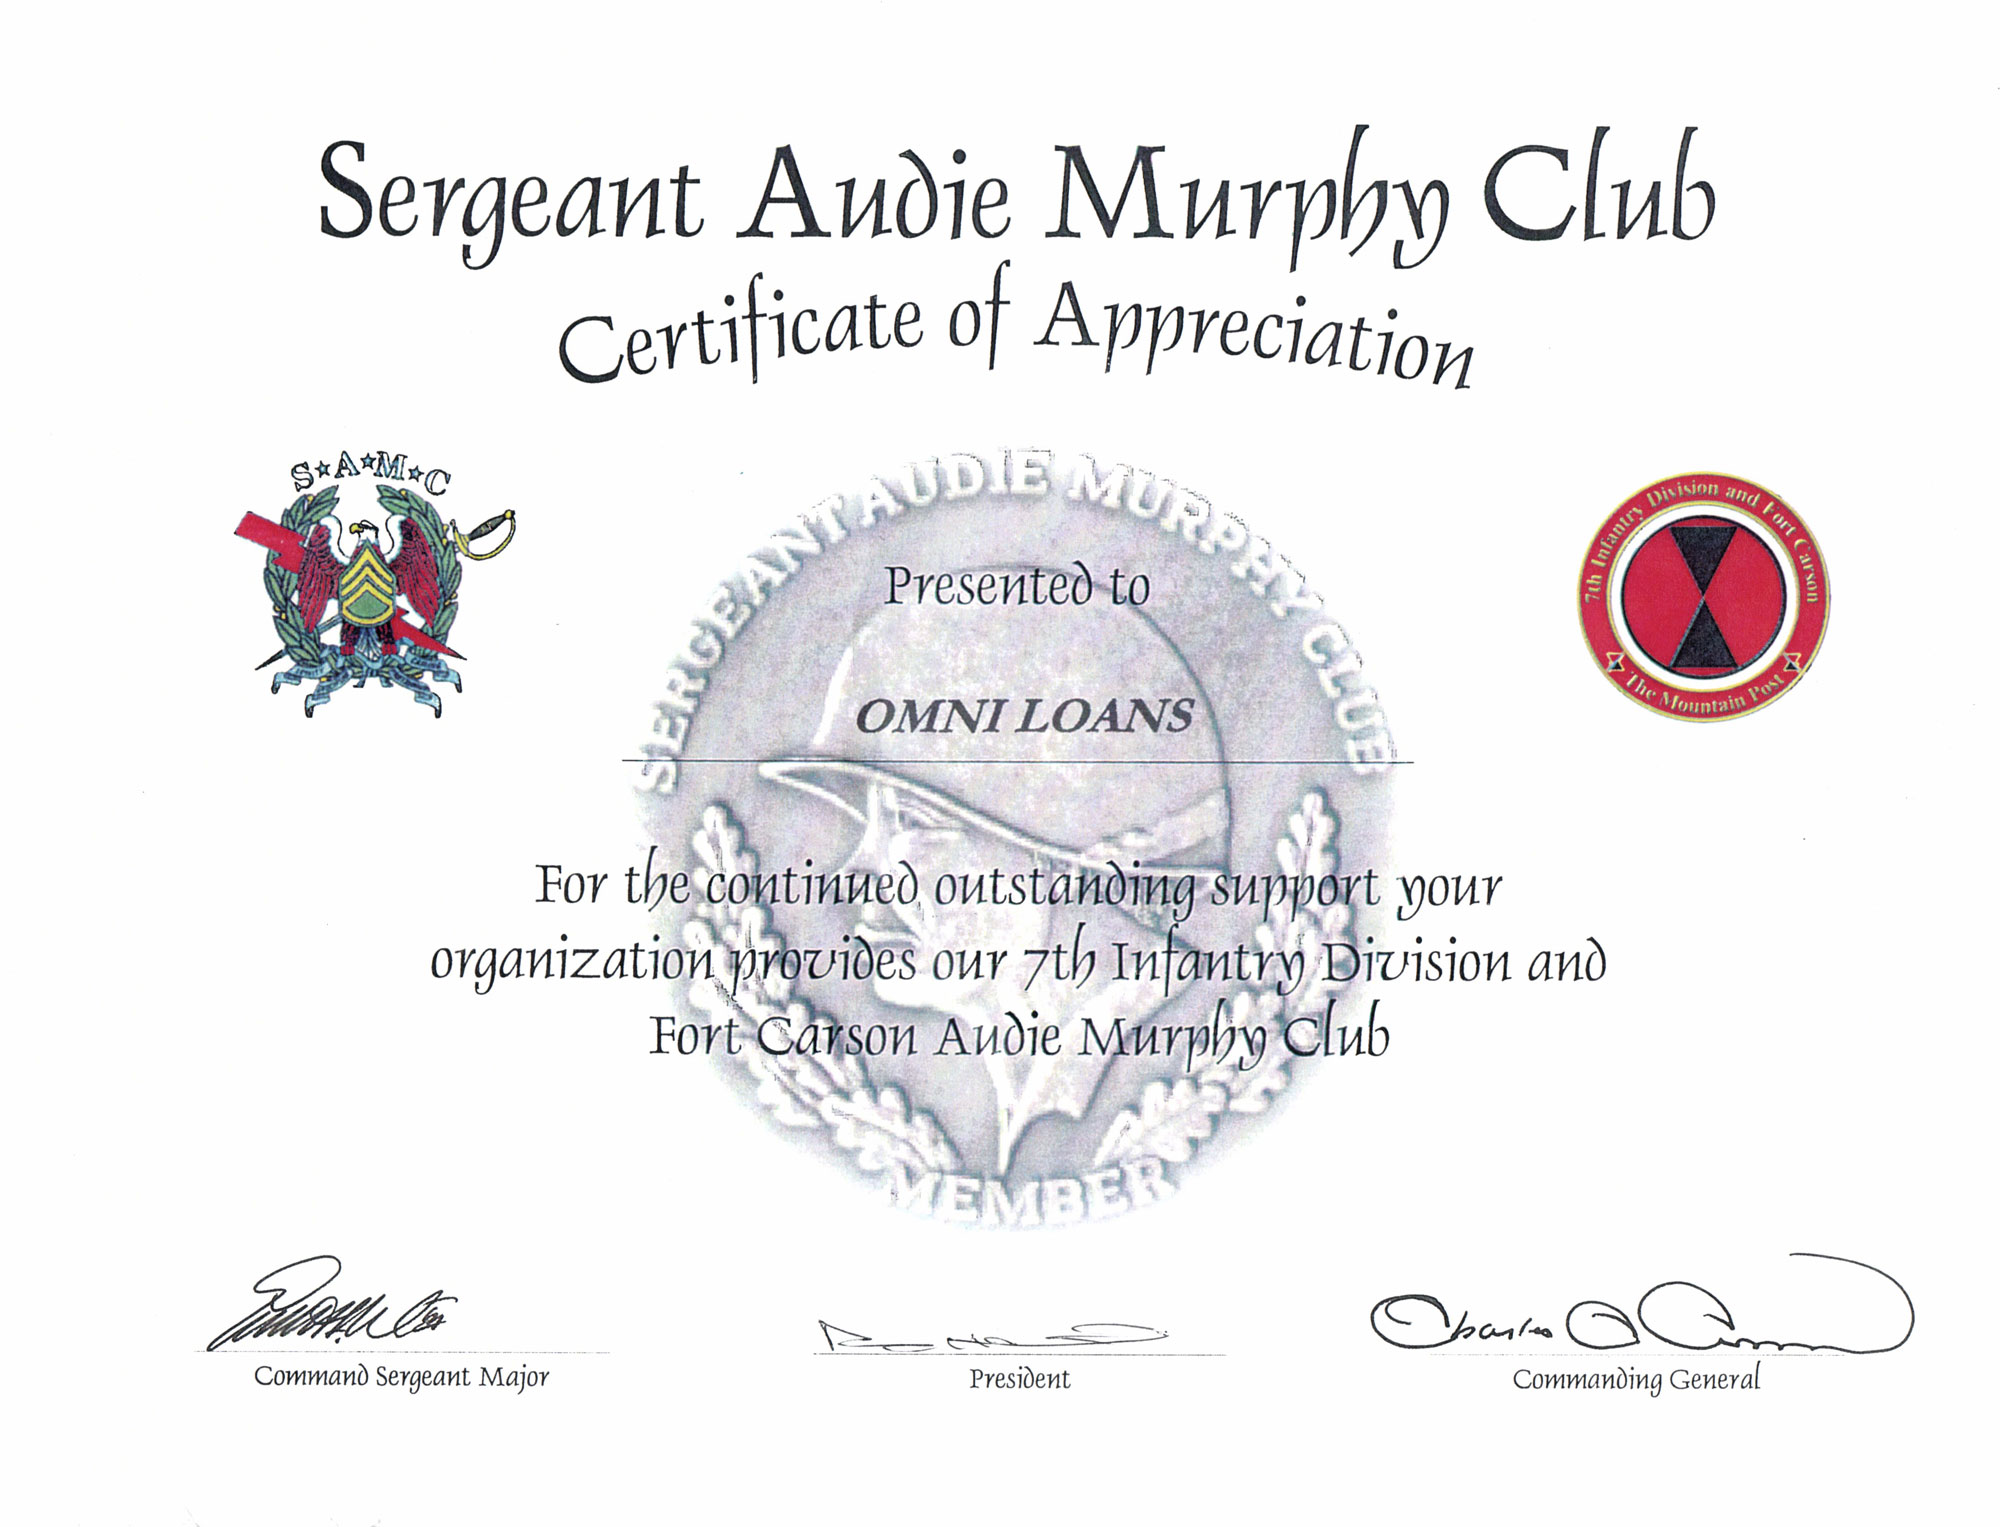 Sergeant Audie Murphy Club